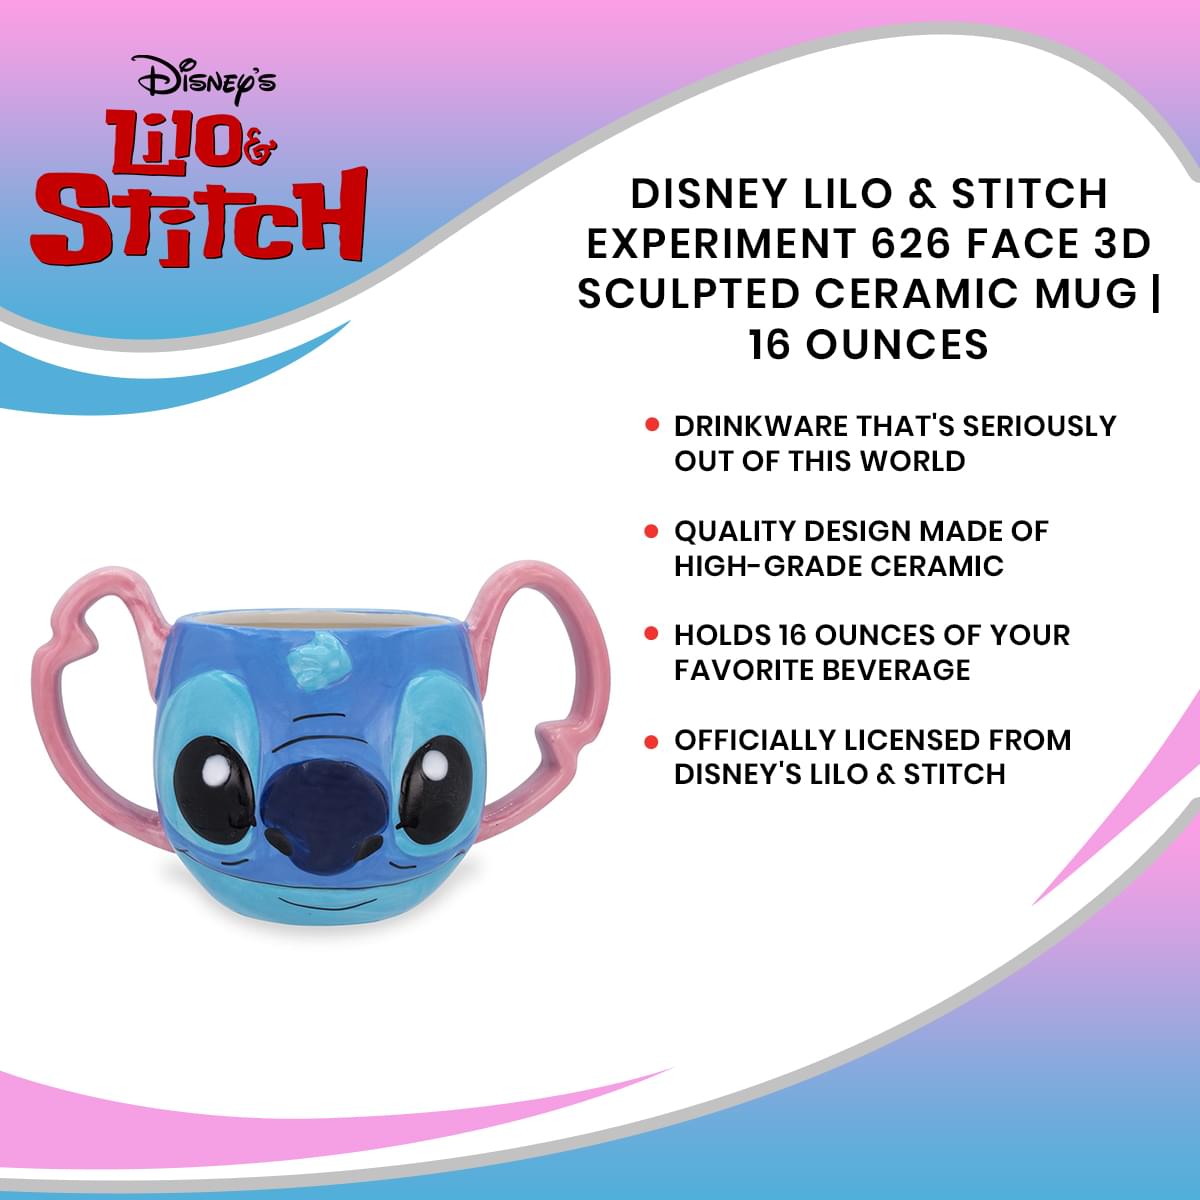 Disney Lilo & Stitch Experiment 626 Face 3D Sculpted Ceramic Mug